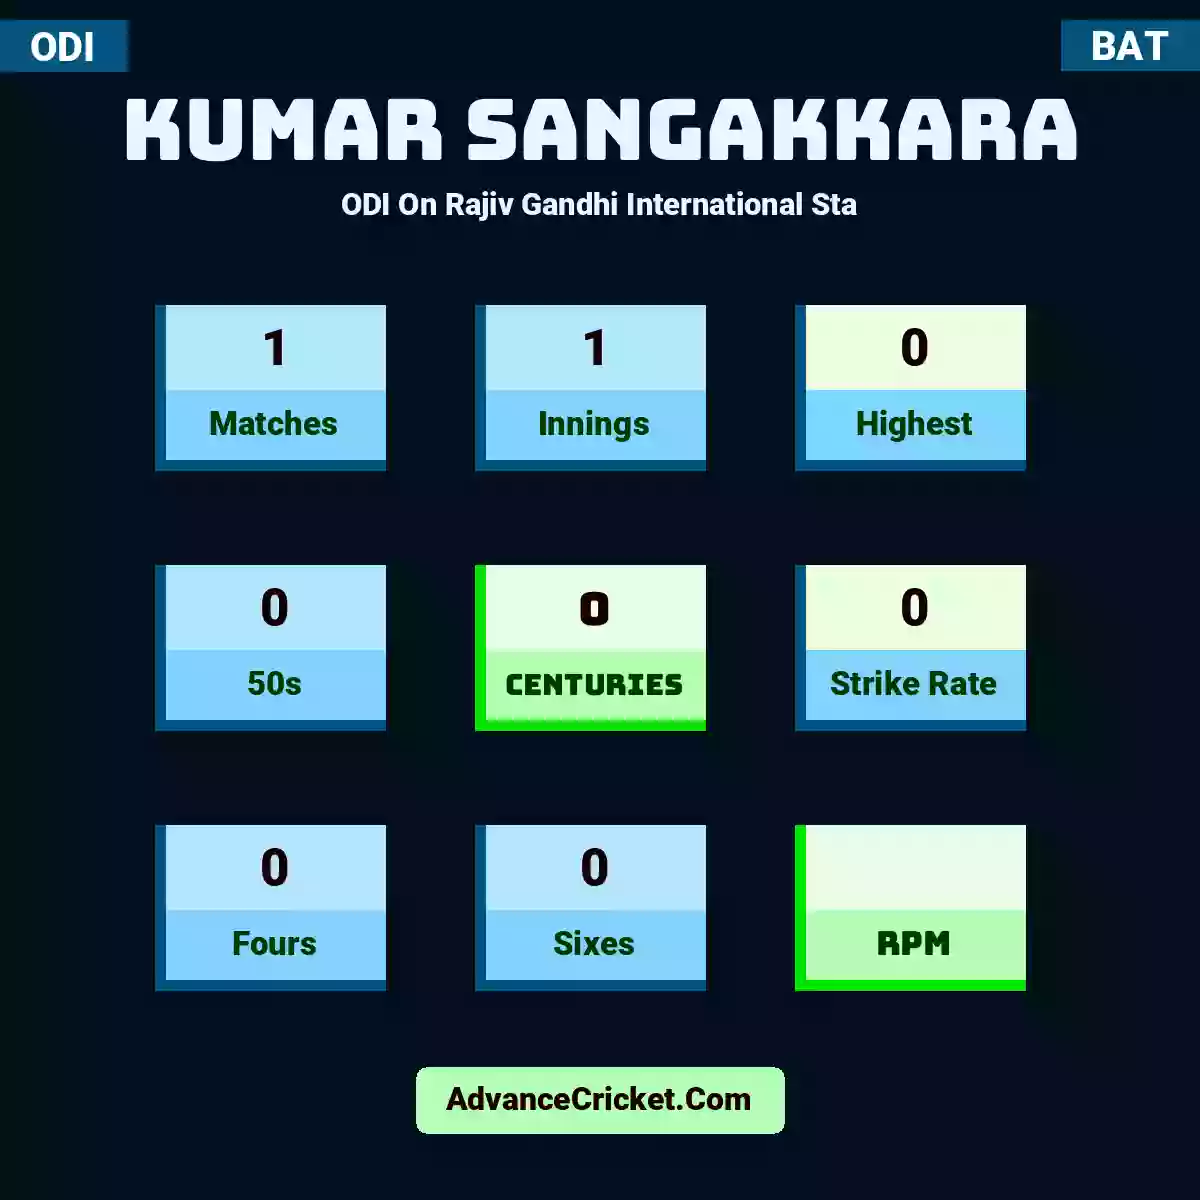 Kumar Sangakkara ODI  On Rajiv Gandhi International Sta, Kumar Sangakkara played 1 matches, scored 0 runs as highest, 0 half-centuries, and 0 centuries, with a strike rate of 0. K.Sangakkara hit 0 fours and 0 sixes.